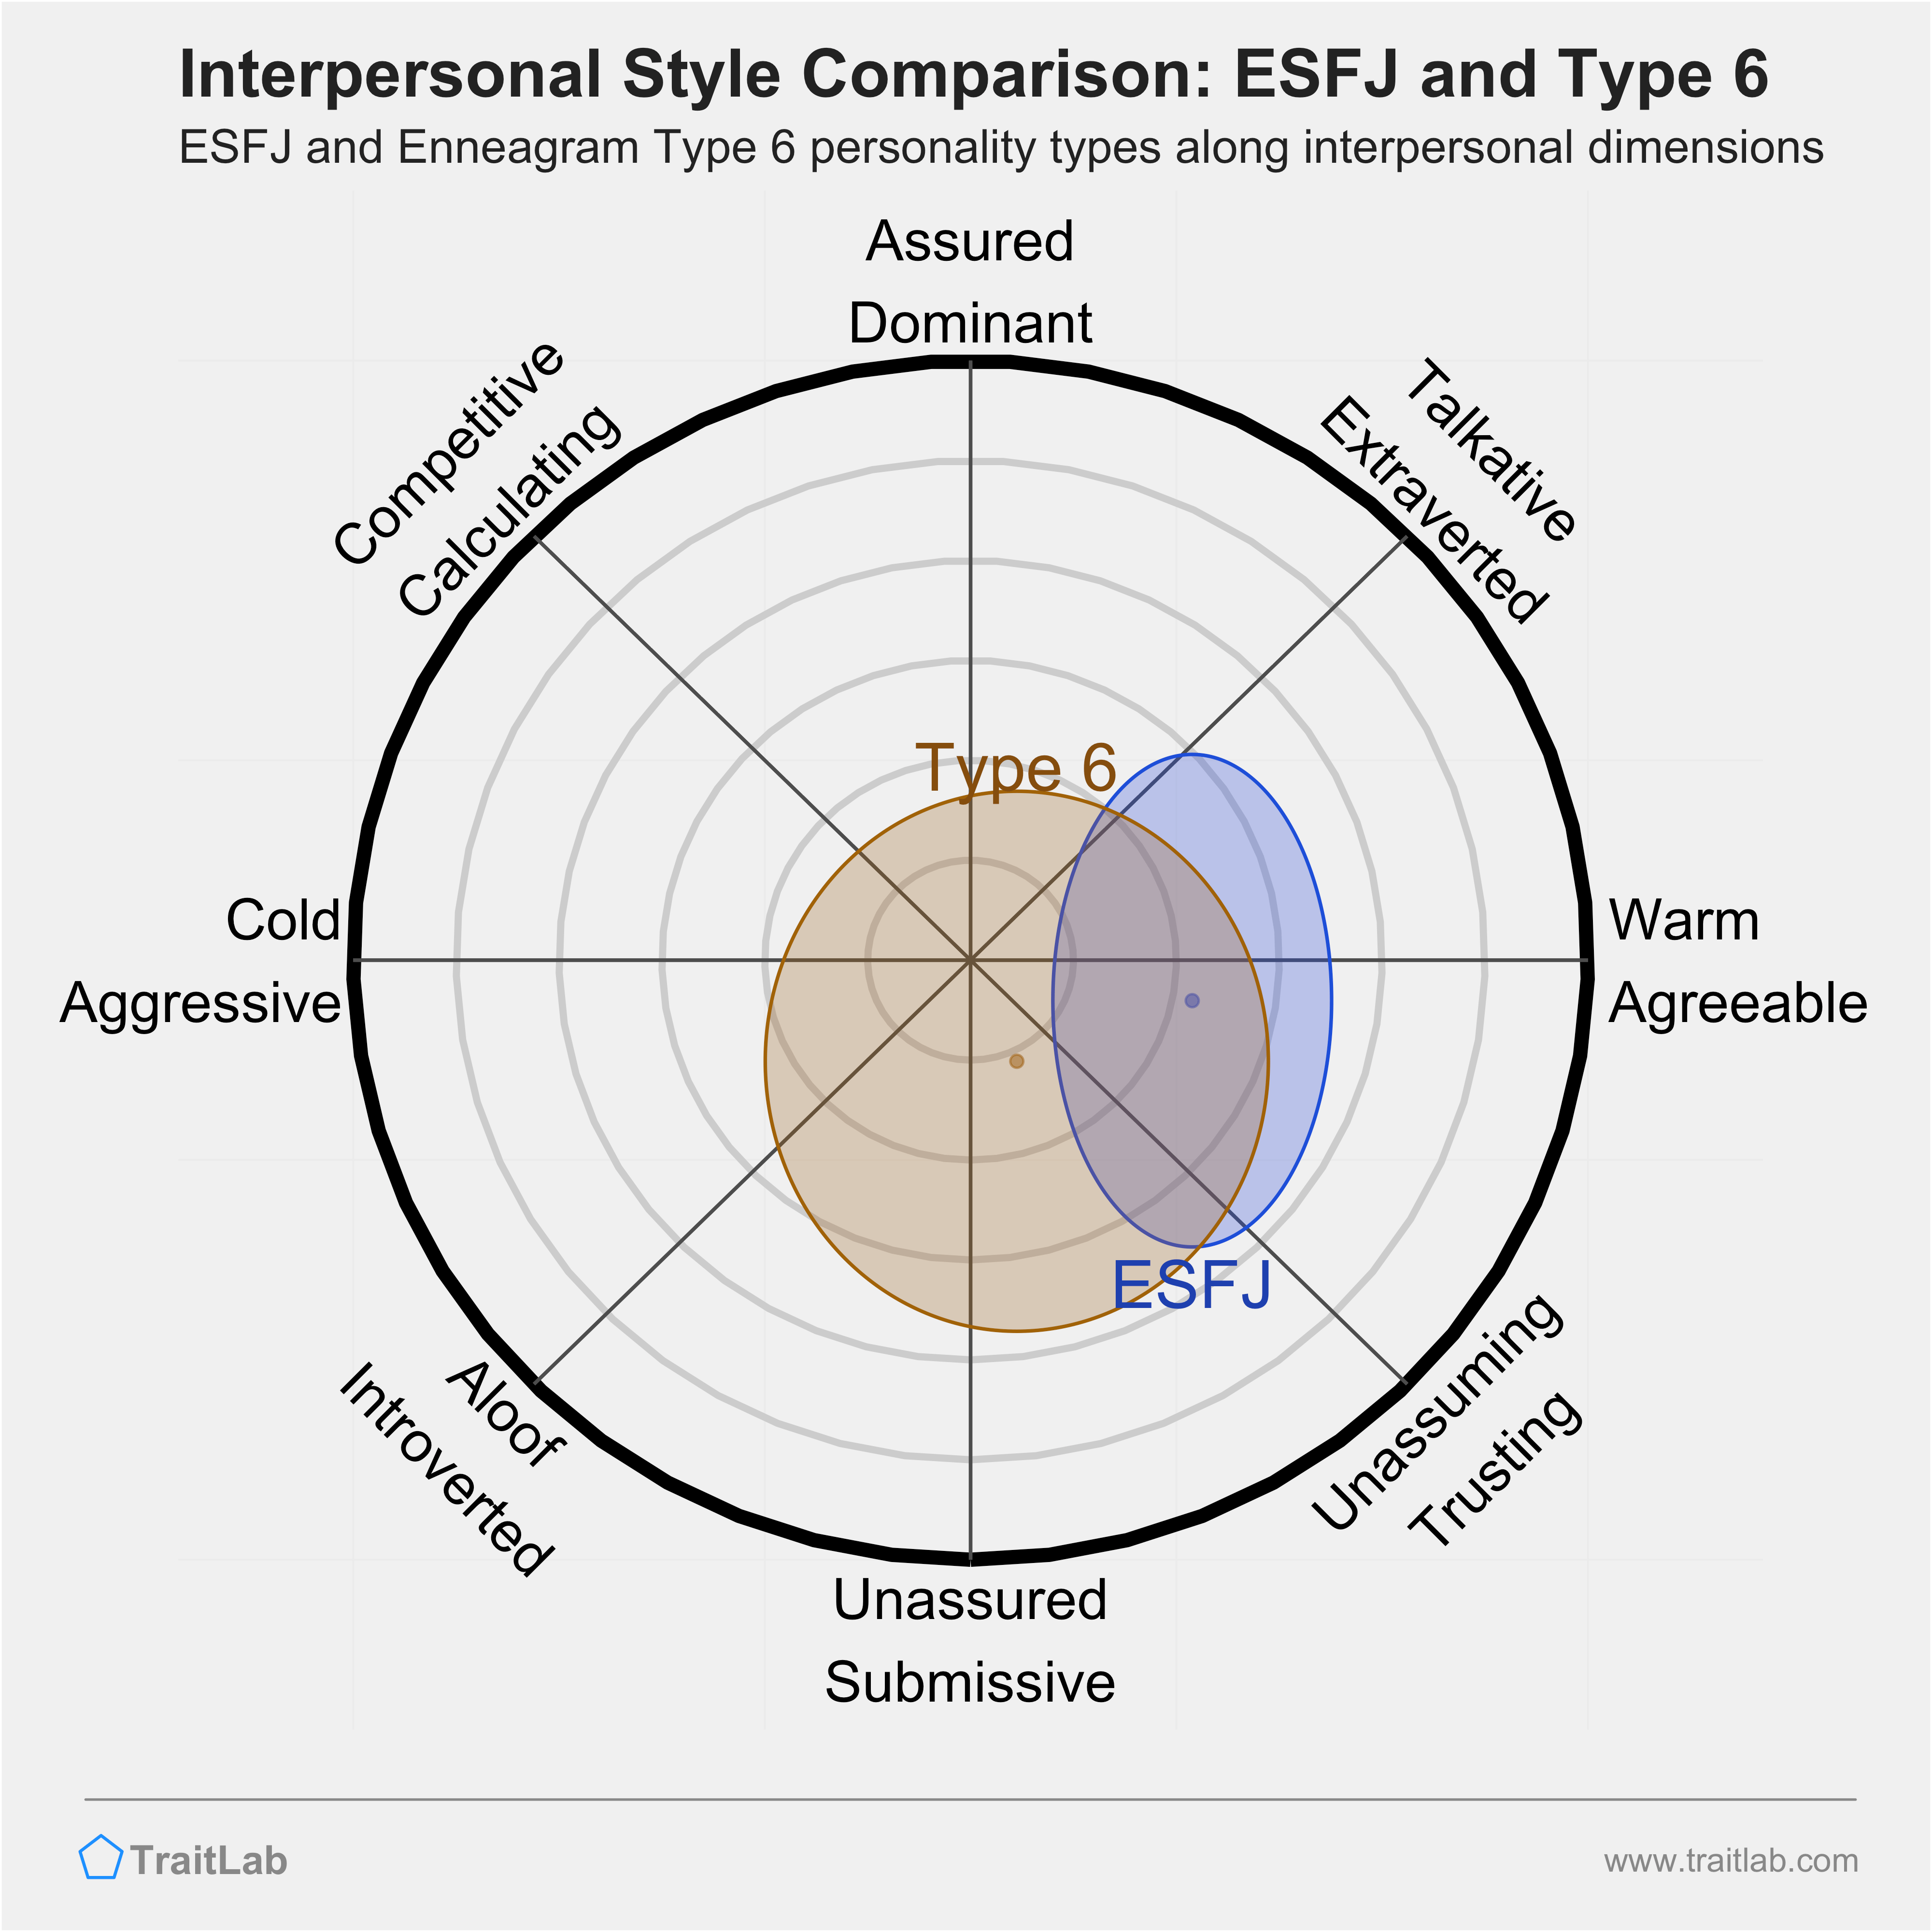 Enneagram ESFJ and Type 6 comparison across interpersonal dimensions